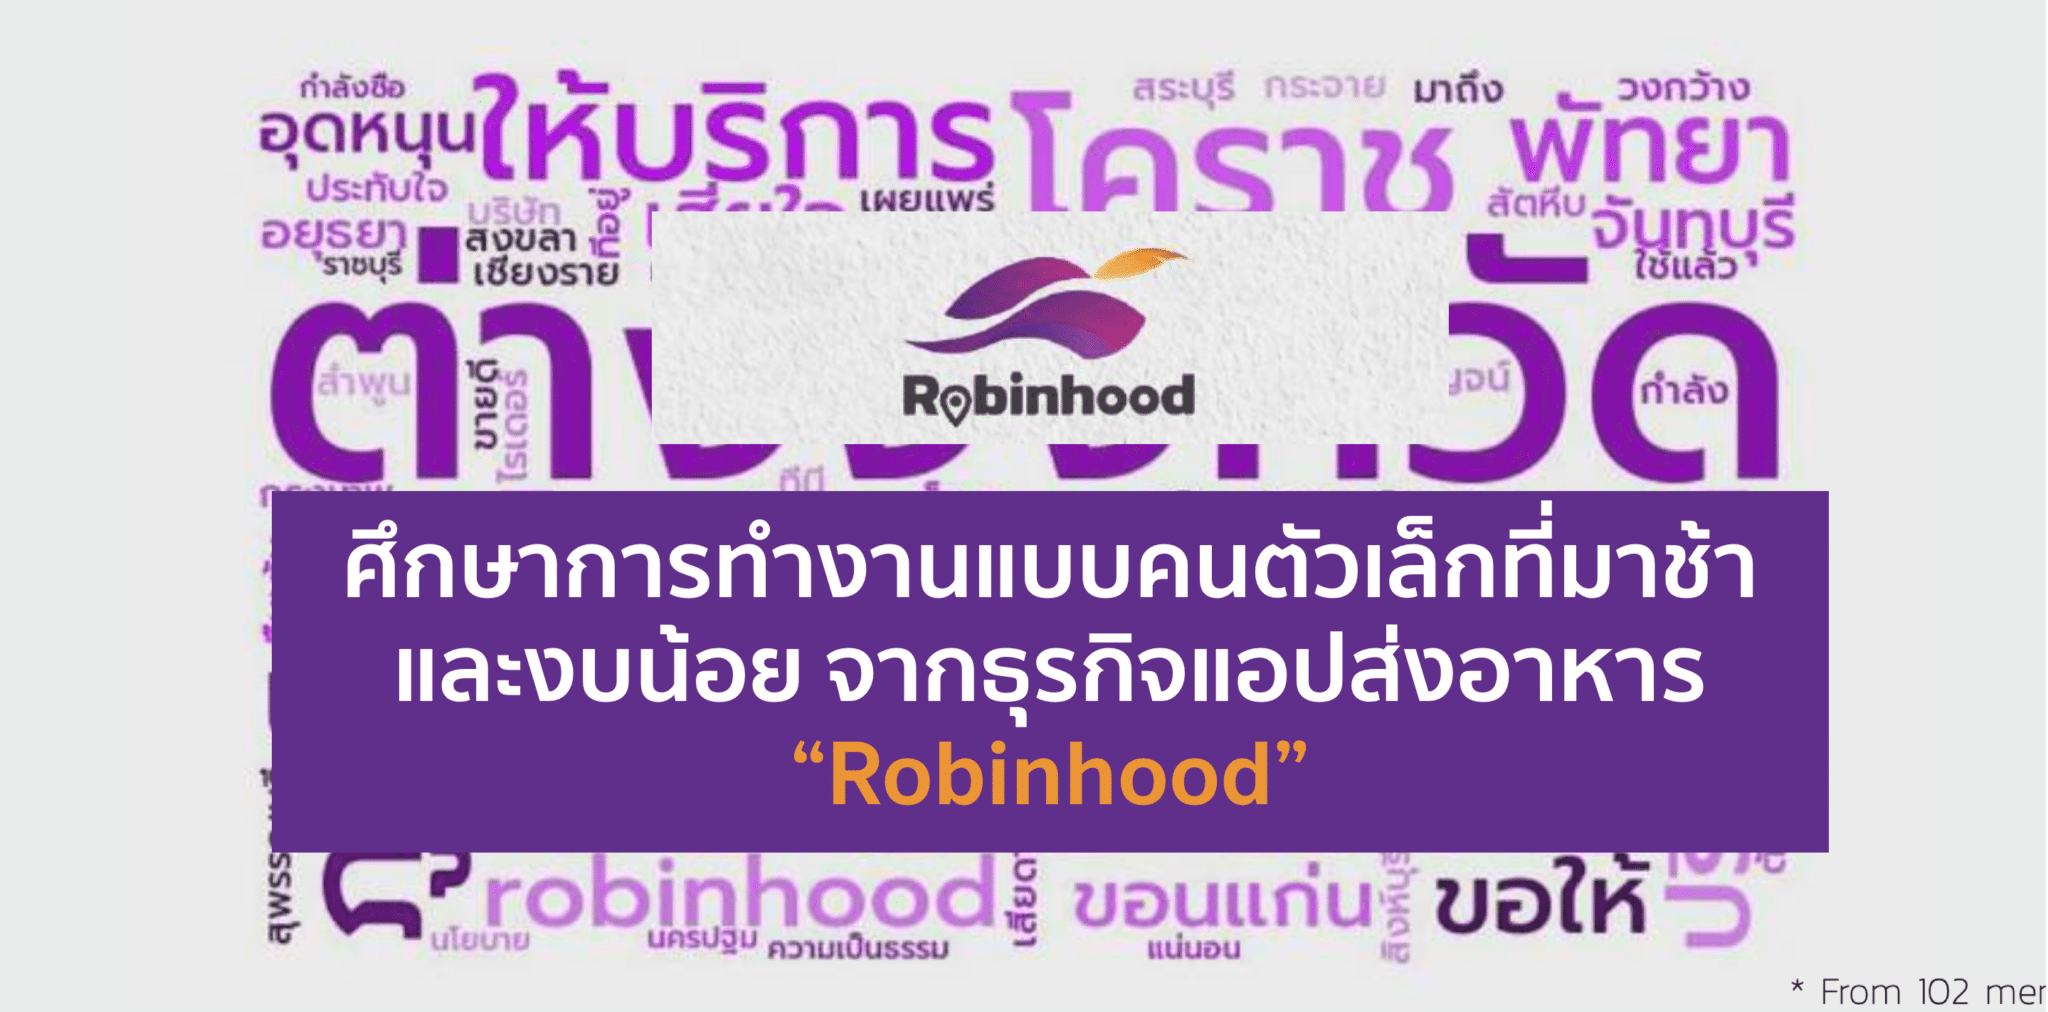 Robinhood Food Delivery Insight 2021 คิดแบบคนตัวเล็กที่มาช้าแต่ชัดเจน